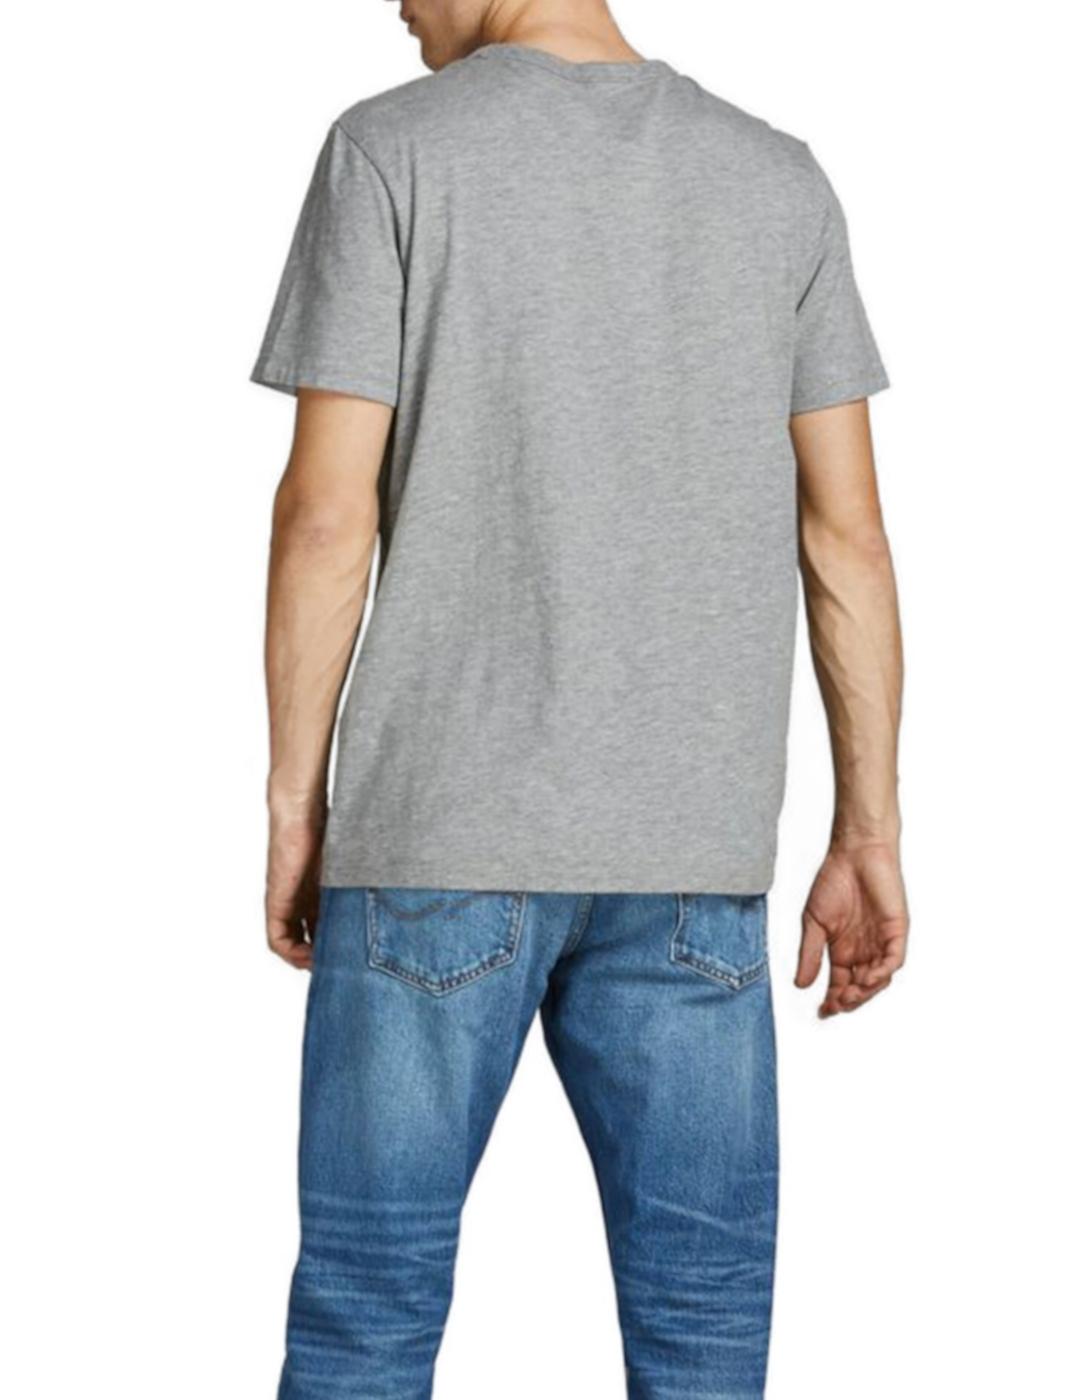 Camiseta Jack-jones gris claro para hombre-a